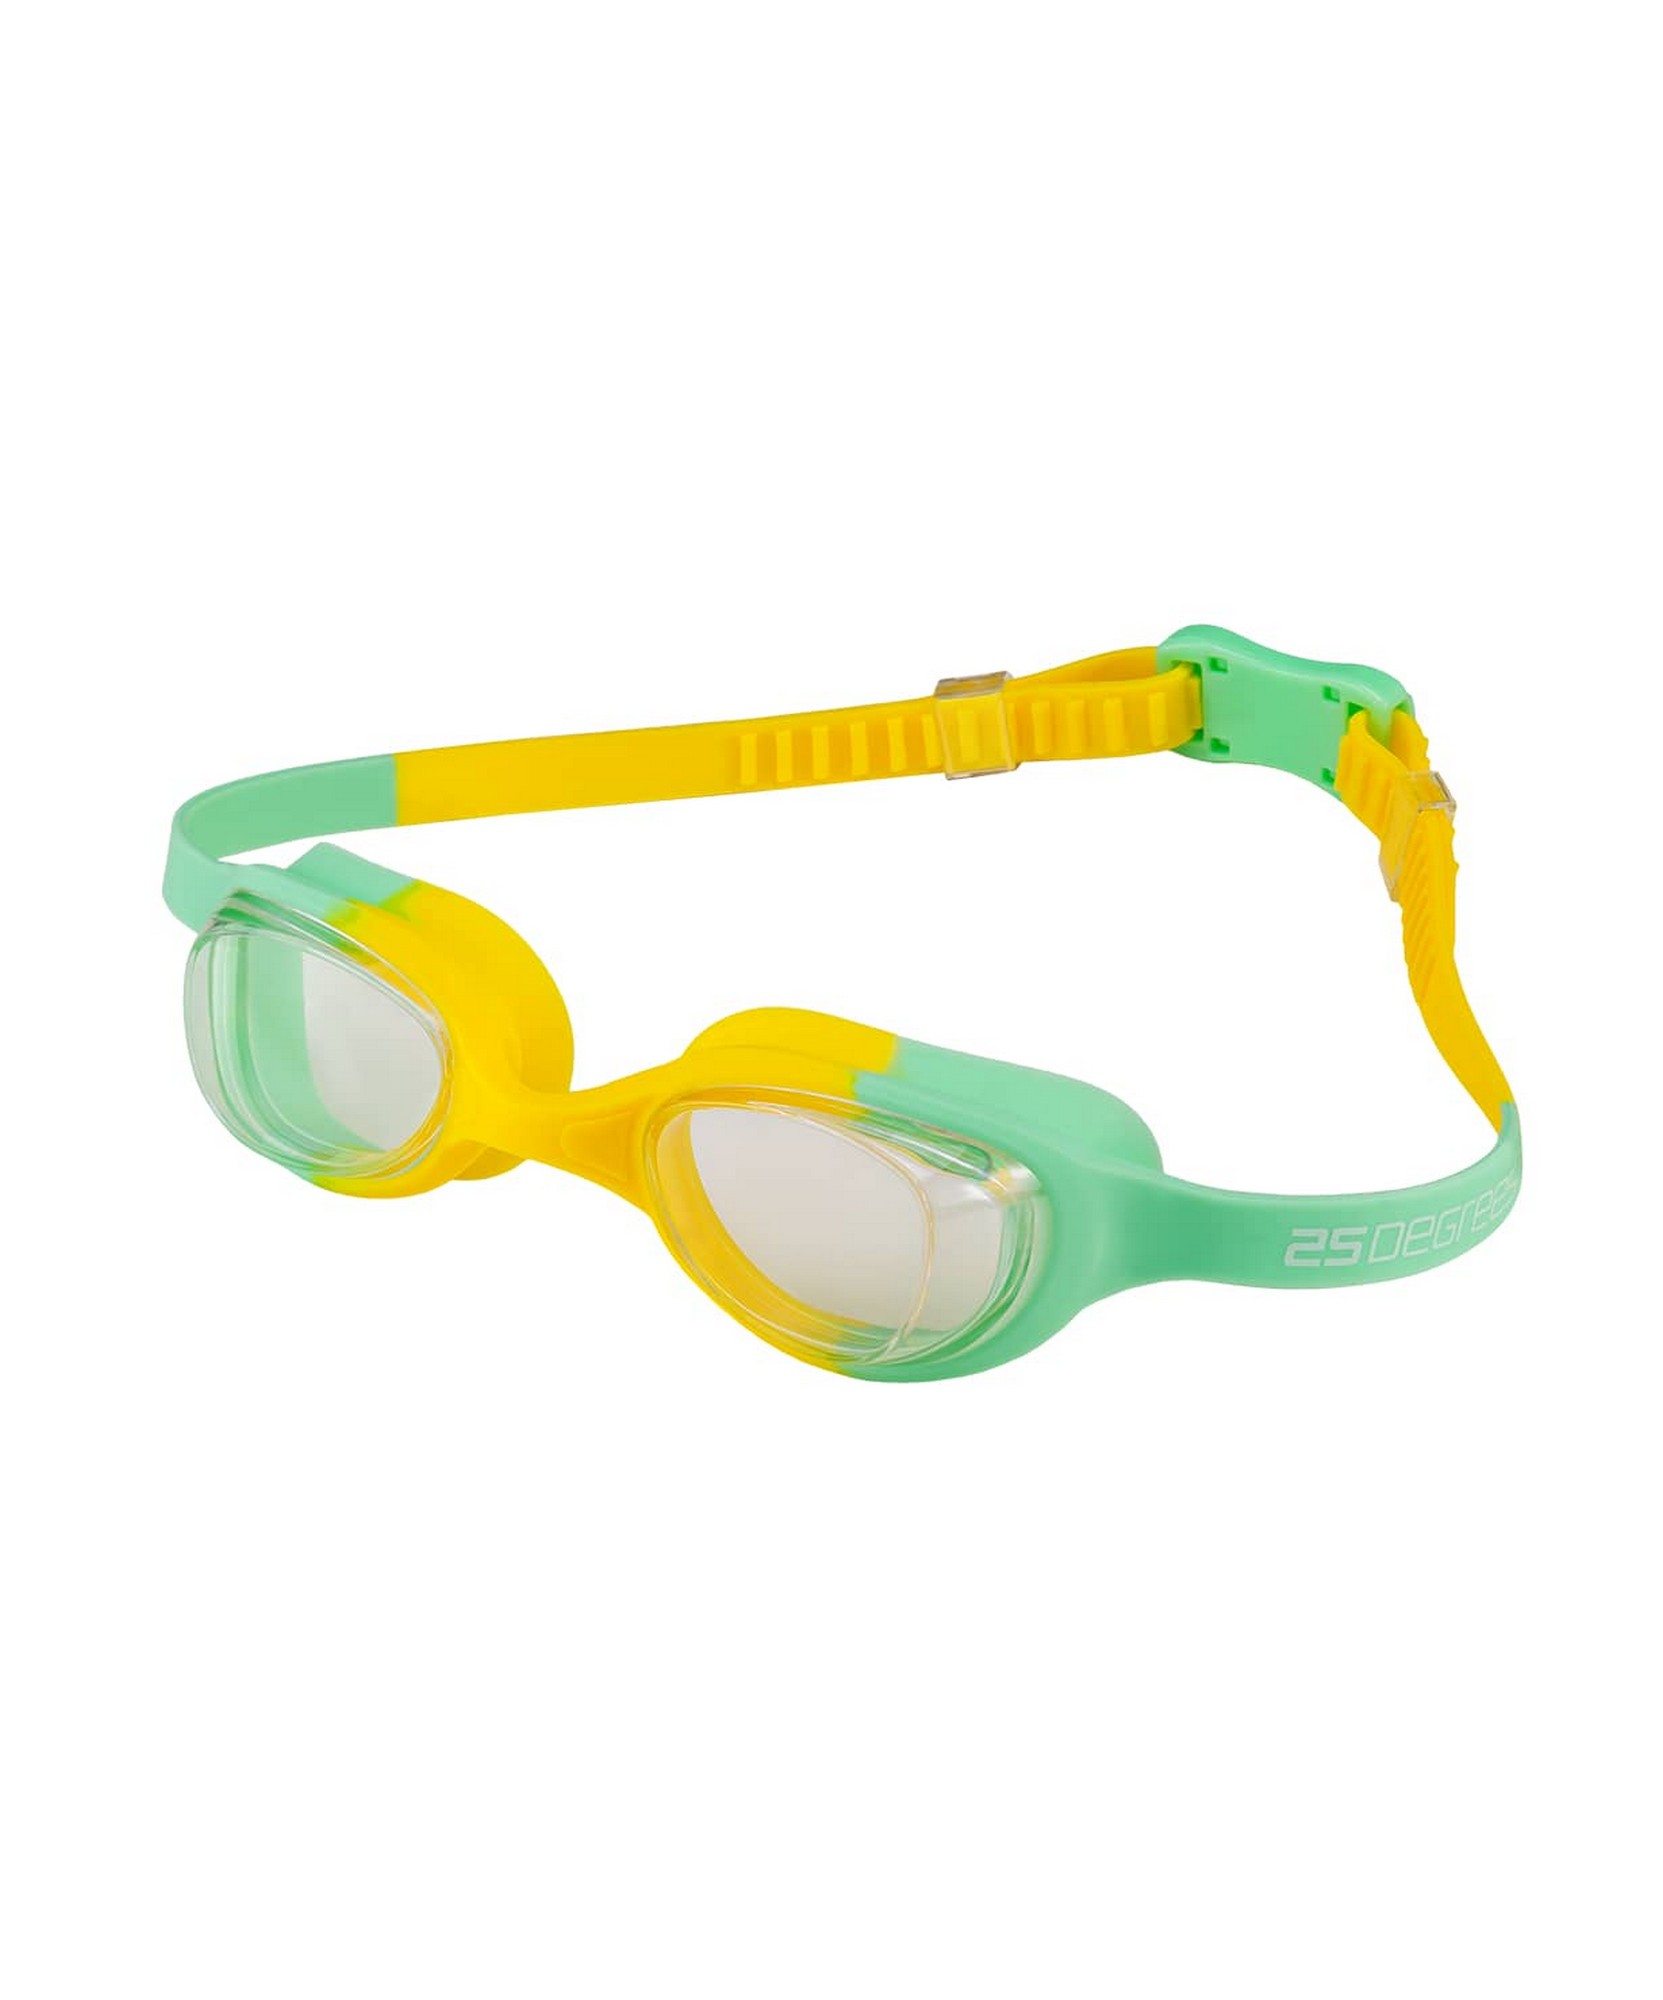 Очки для плавания детские 25Degrees Dory Green\Yellow 1663_2000